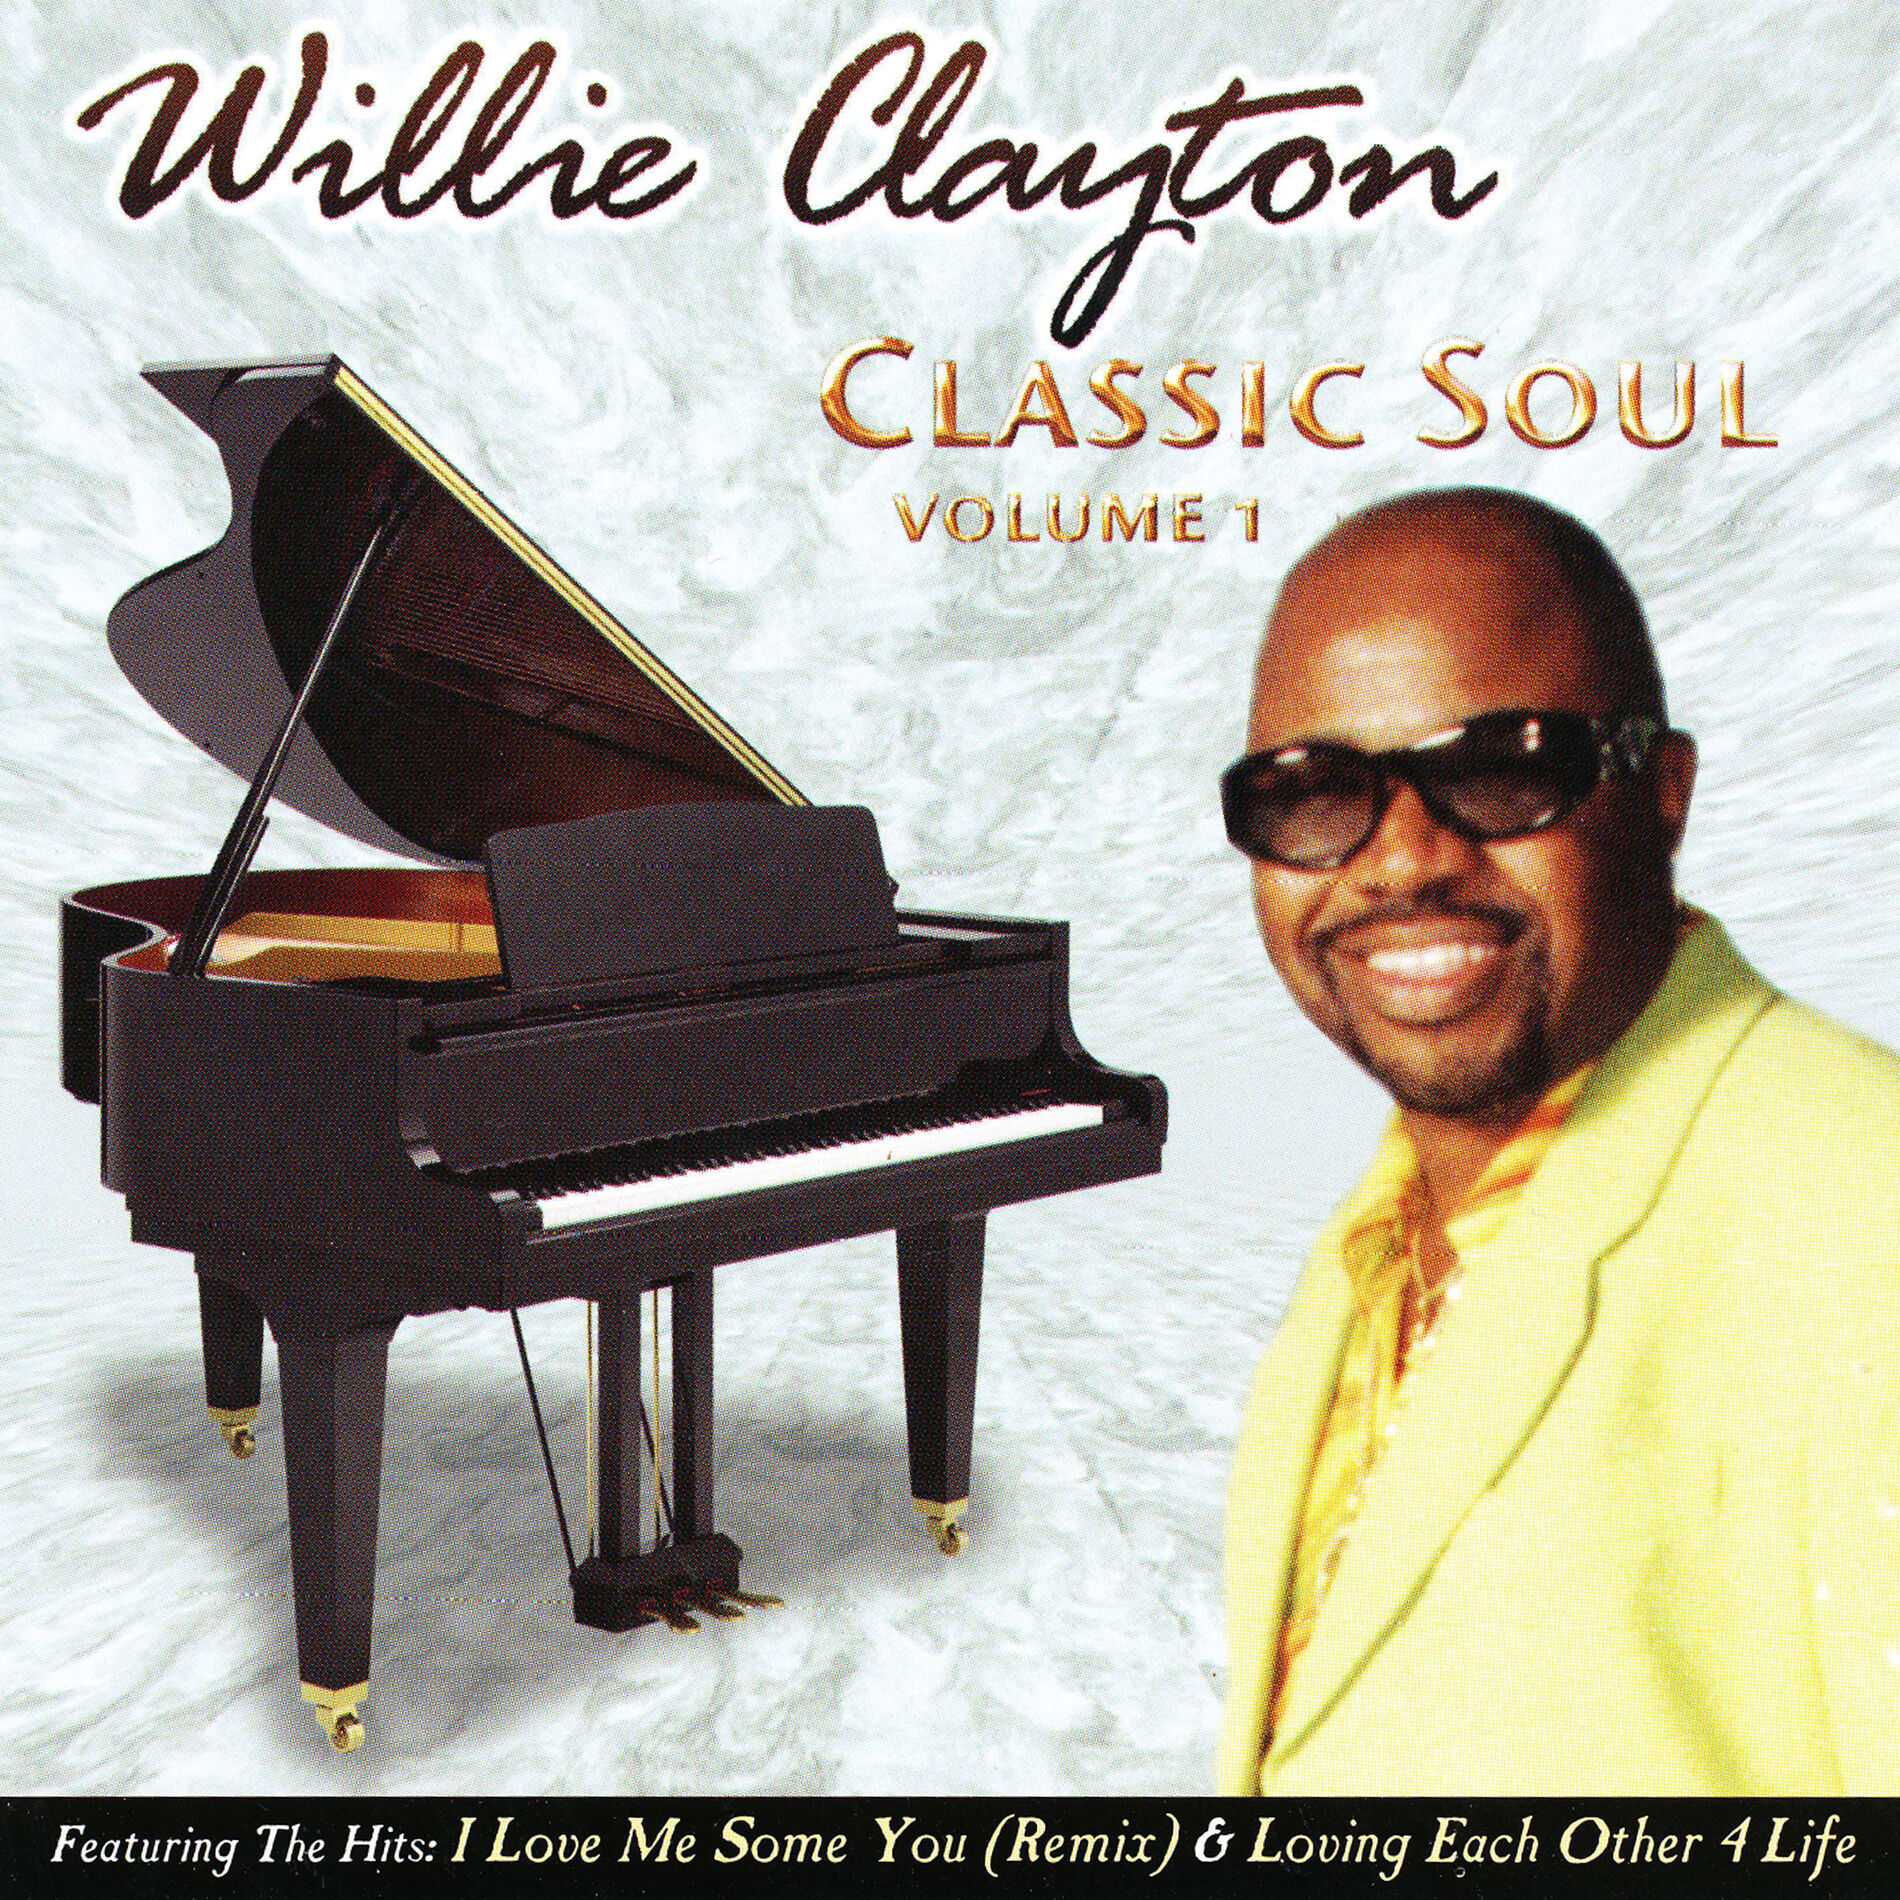 Willie Clayton: albums, songs, playlists | Listen on Deezer